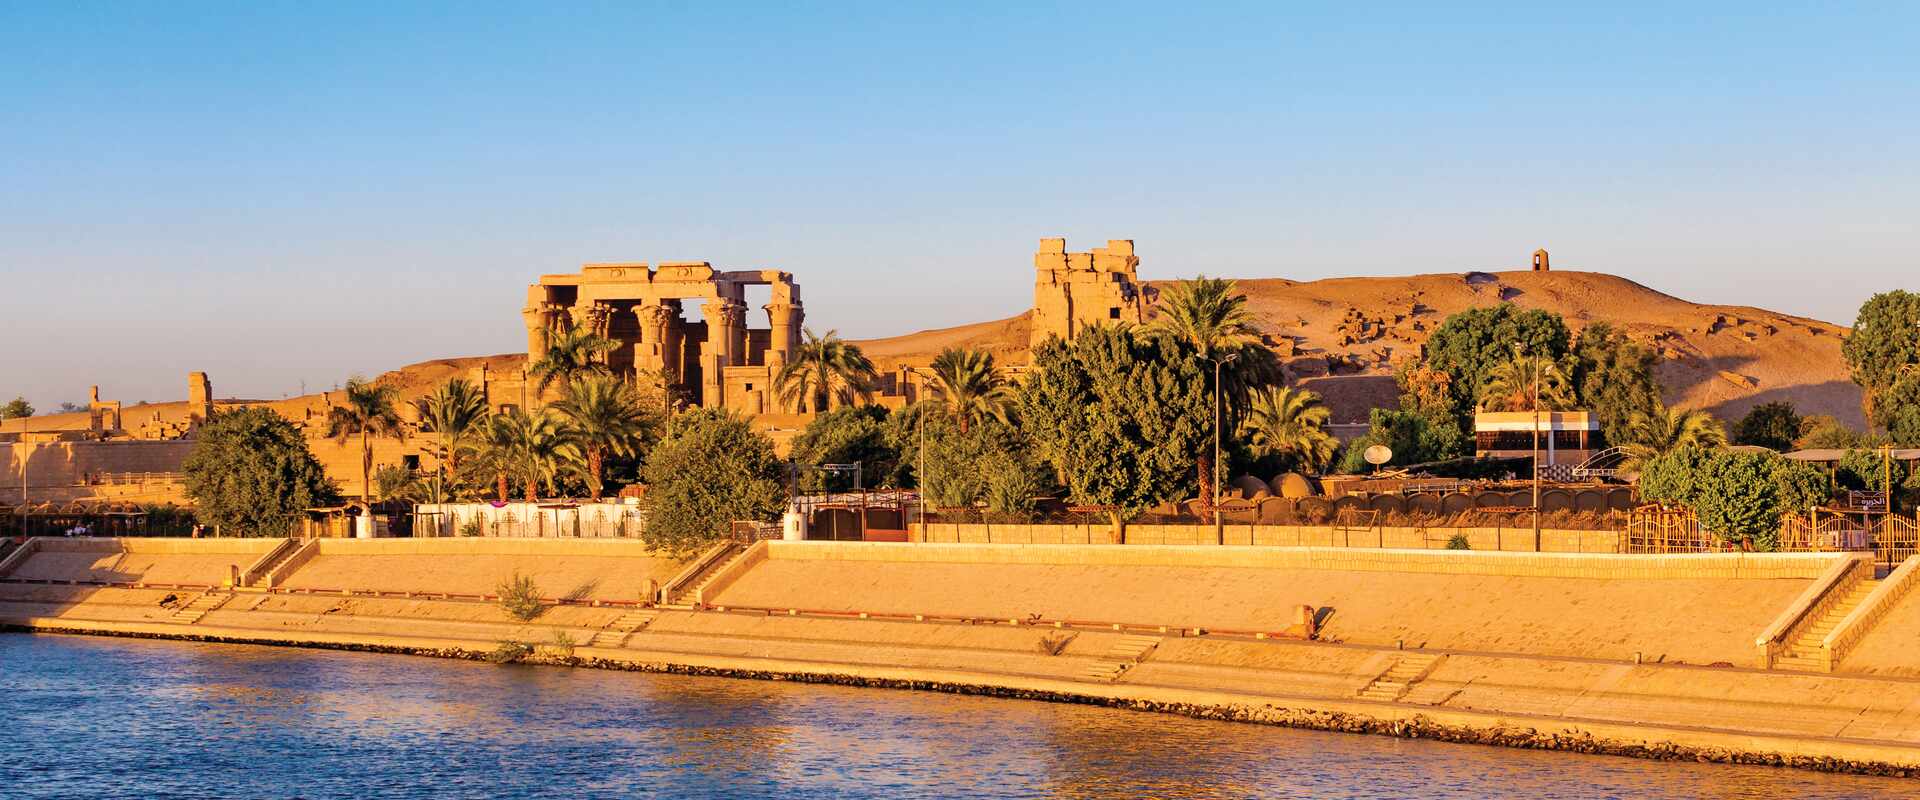 Egypt  Luxury River Cruising on the Nile River